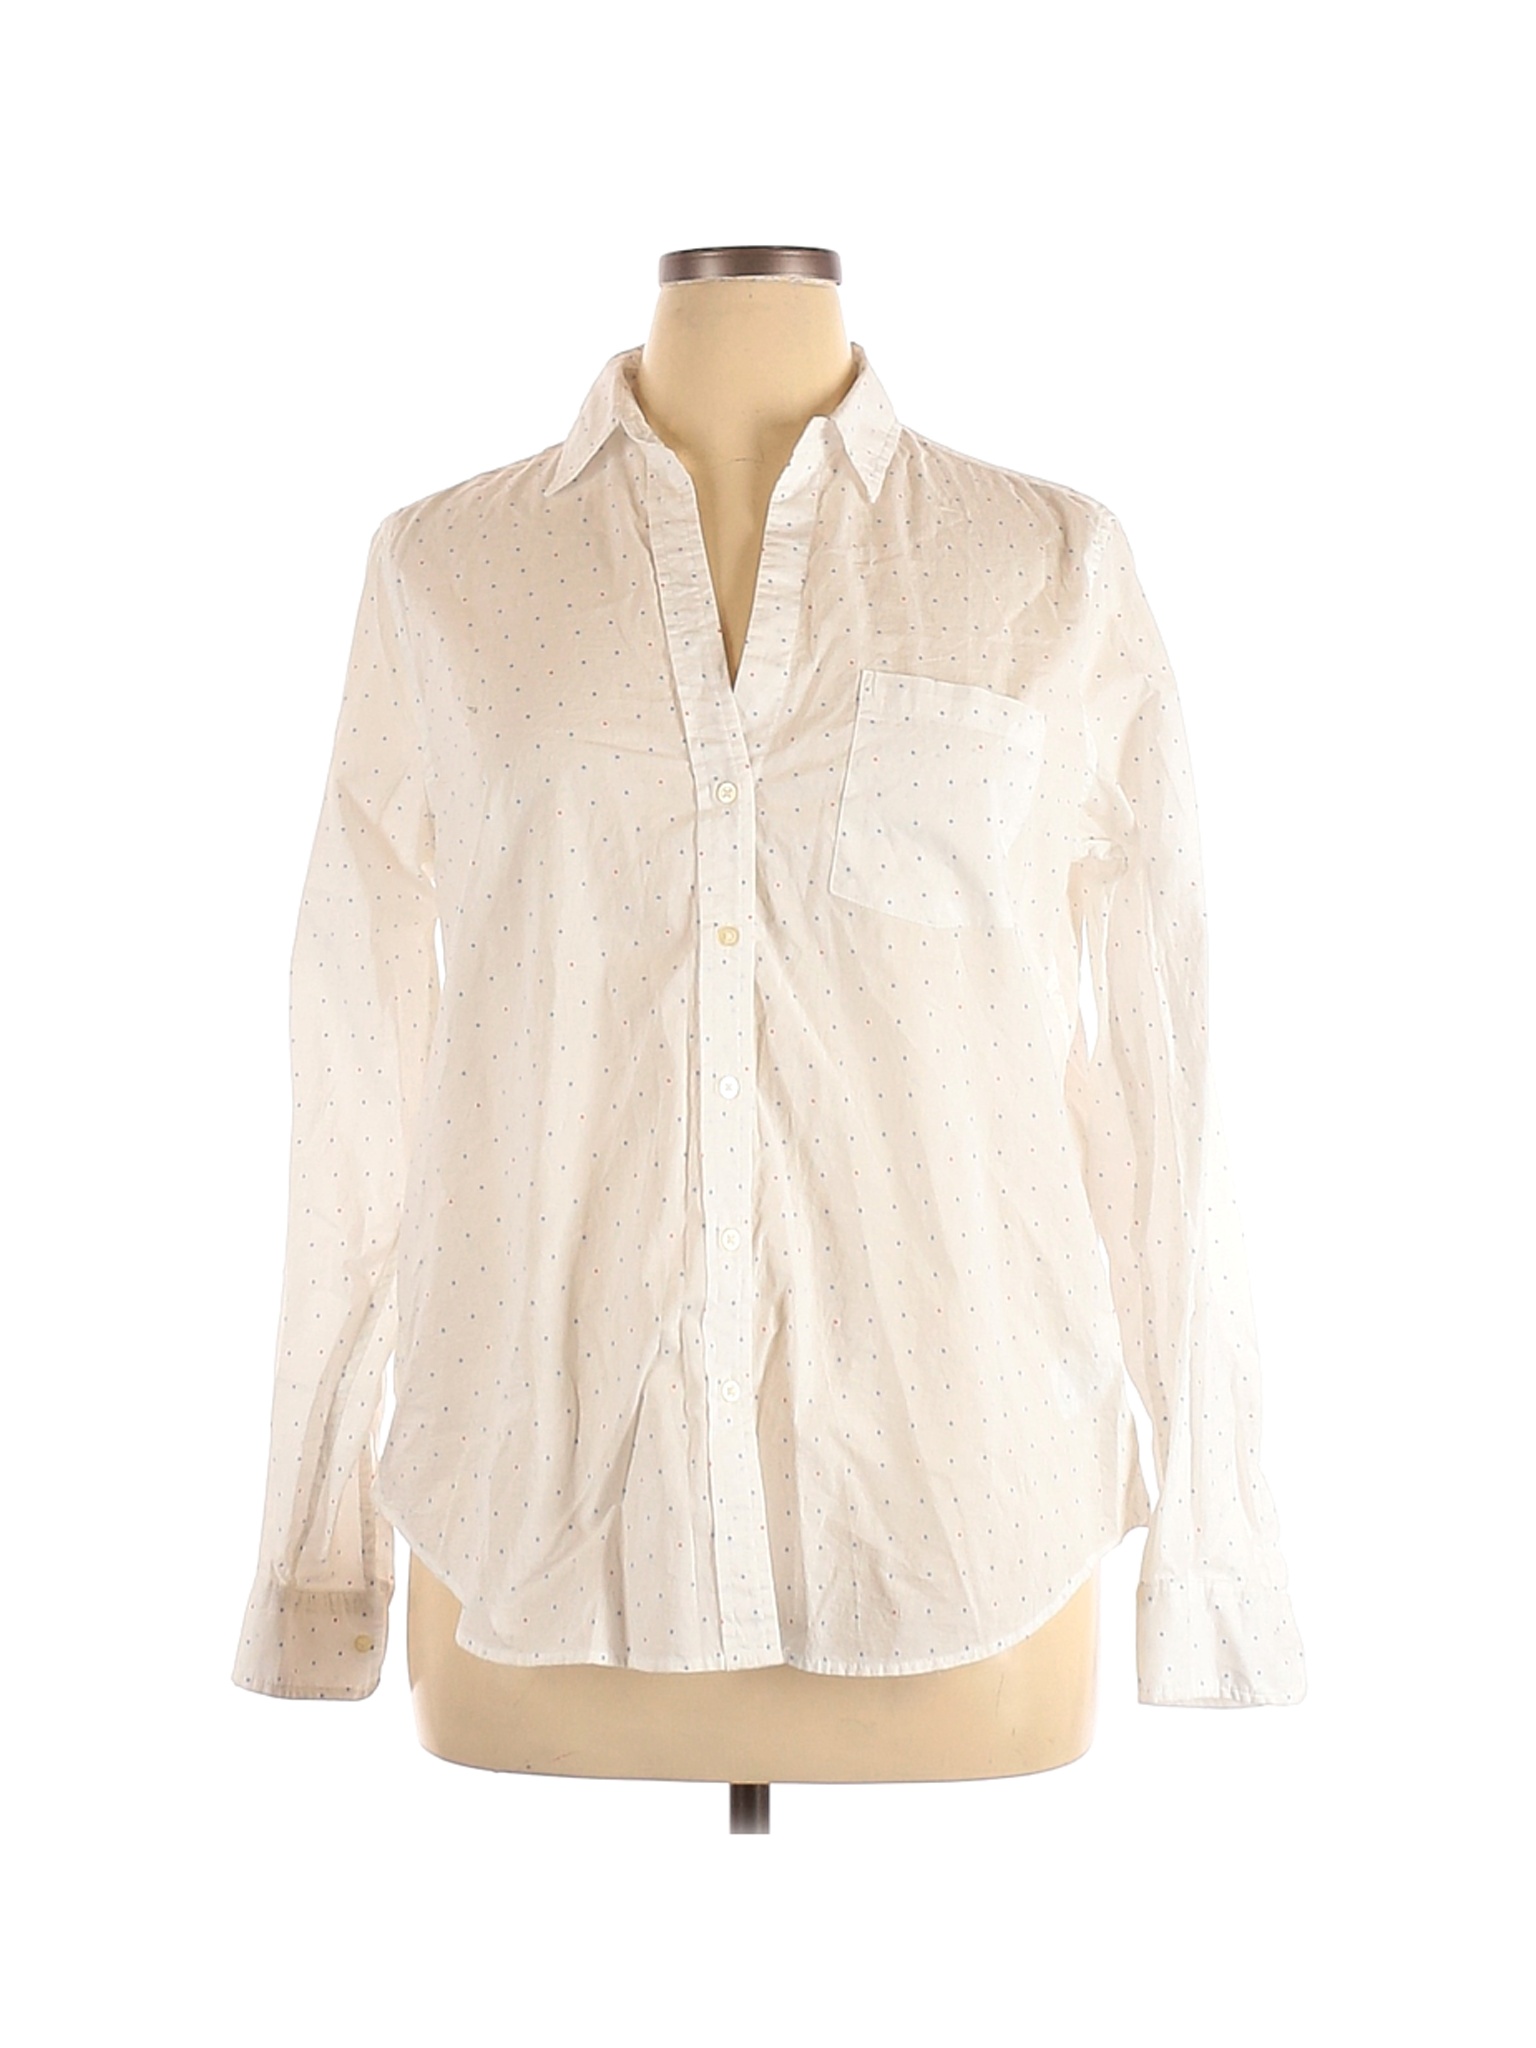 Gap Women Ivory Long Sleeve Button-Down Shirt XL | eBay